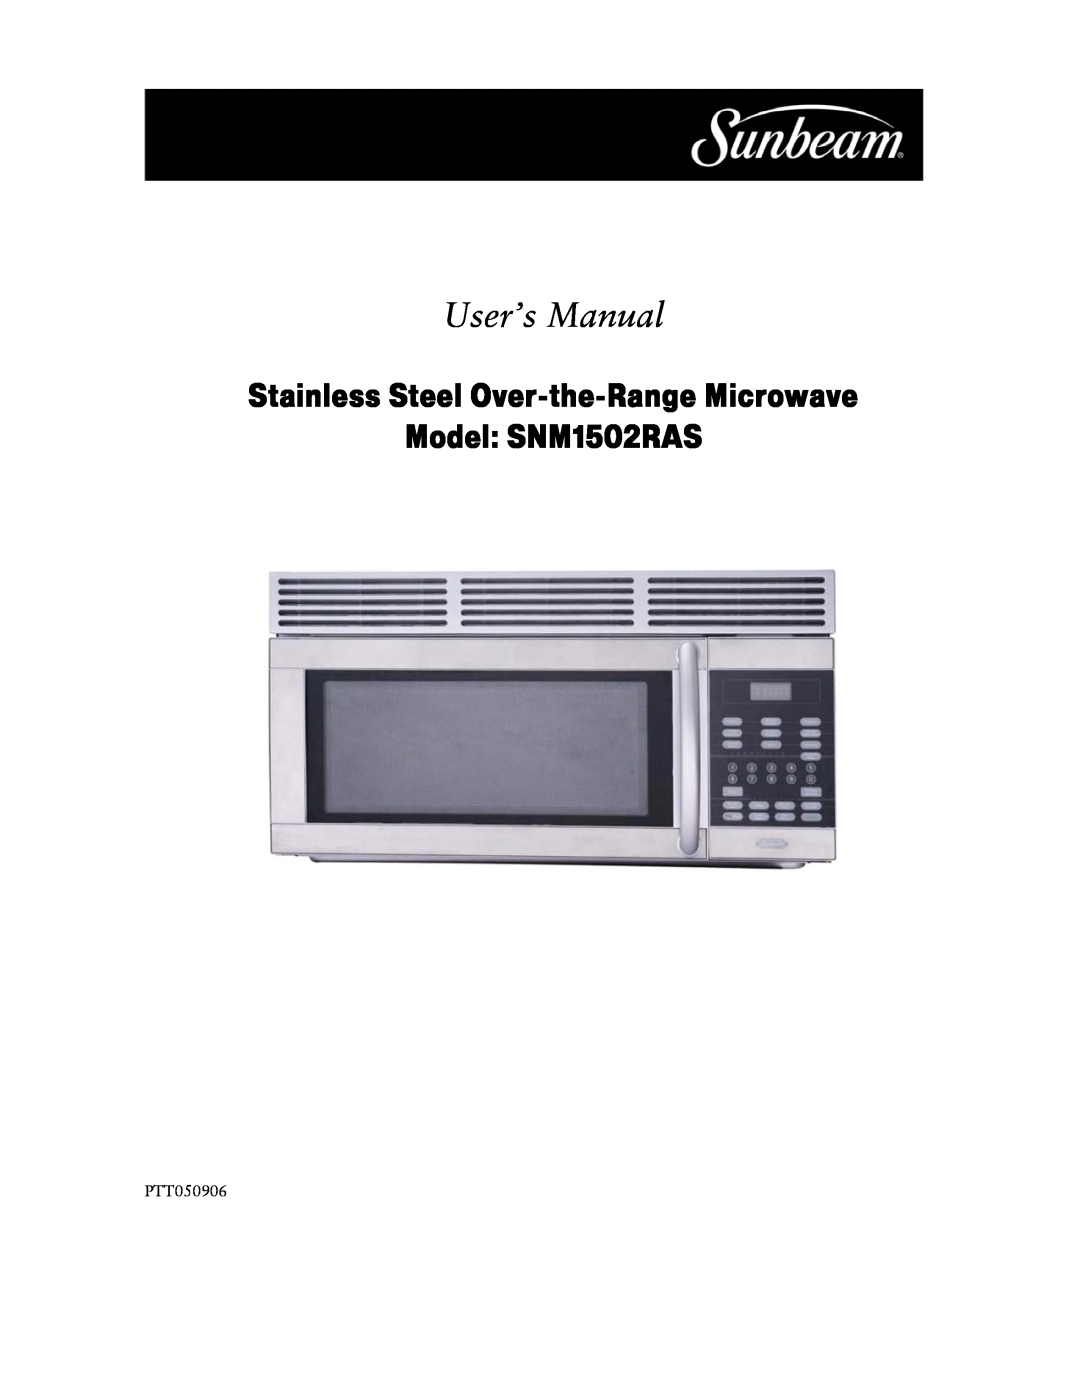 Sunbeam user manual User’s Manual, Stainless Steel Over-the-Range Microwave Model SNM1502RAS 